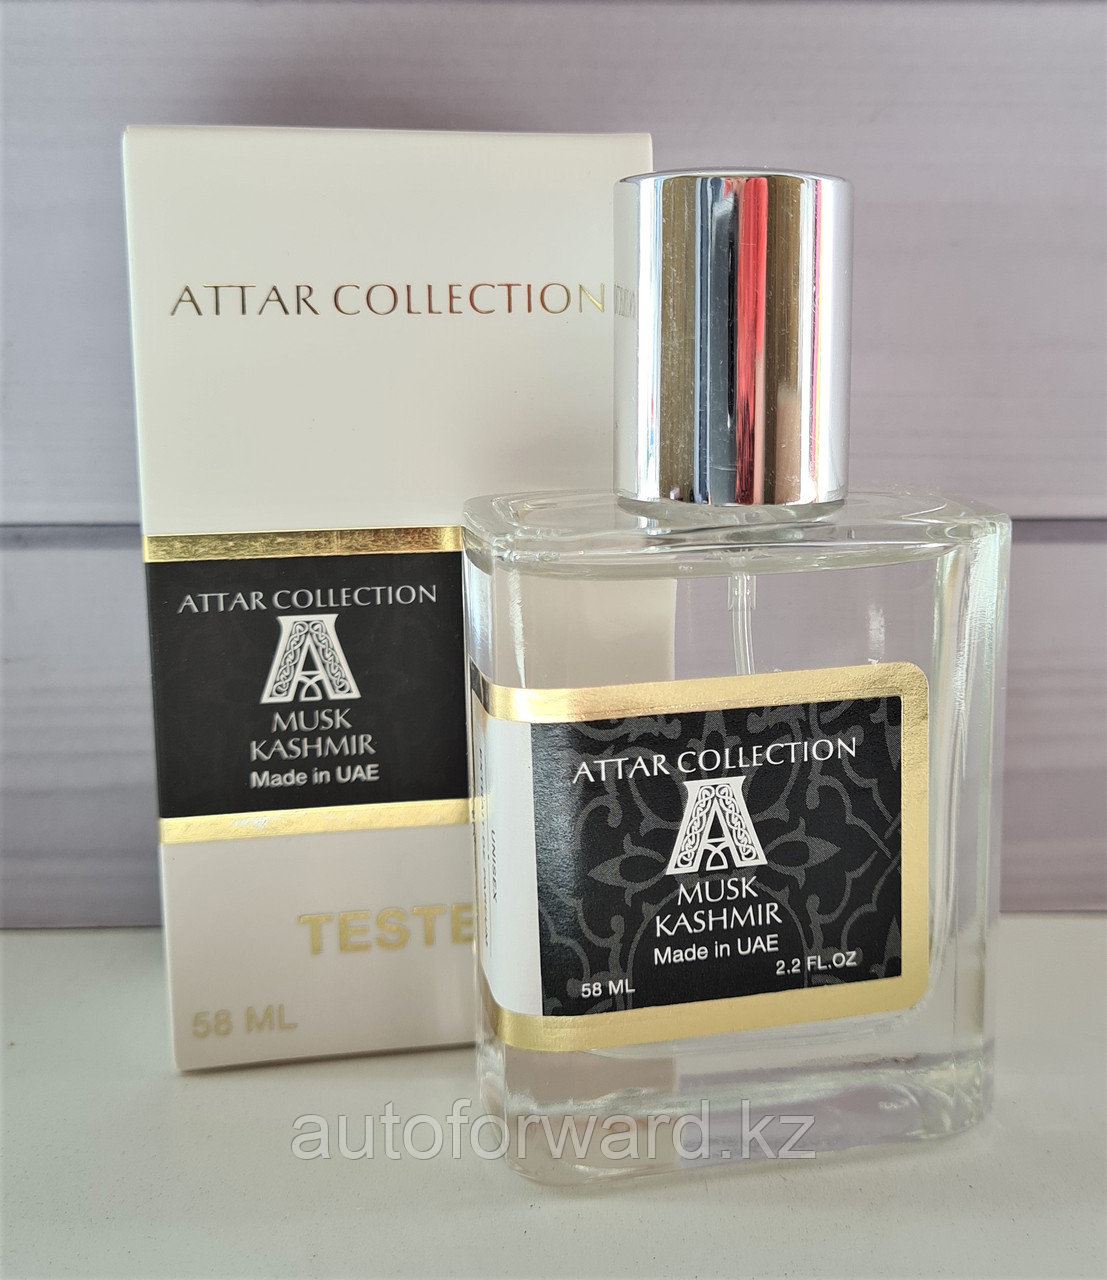 Тестер Attar collection Musk Kashmir 58 ml